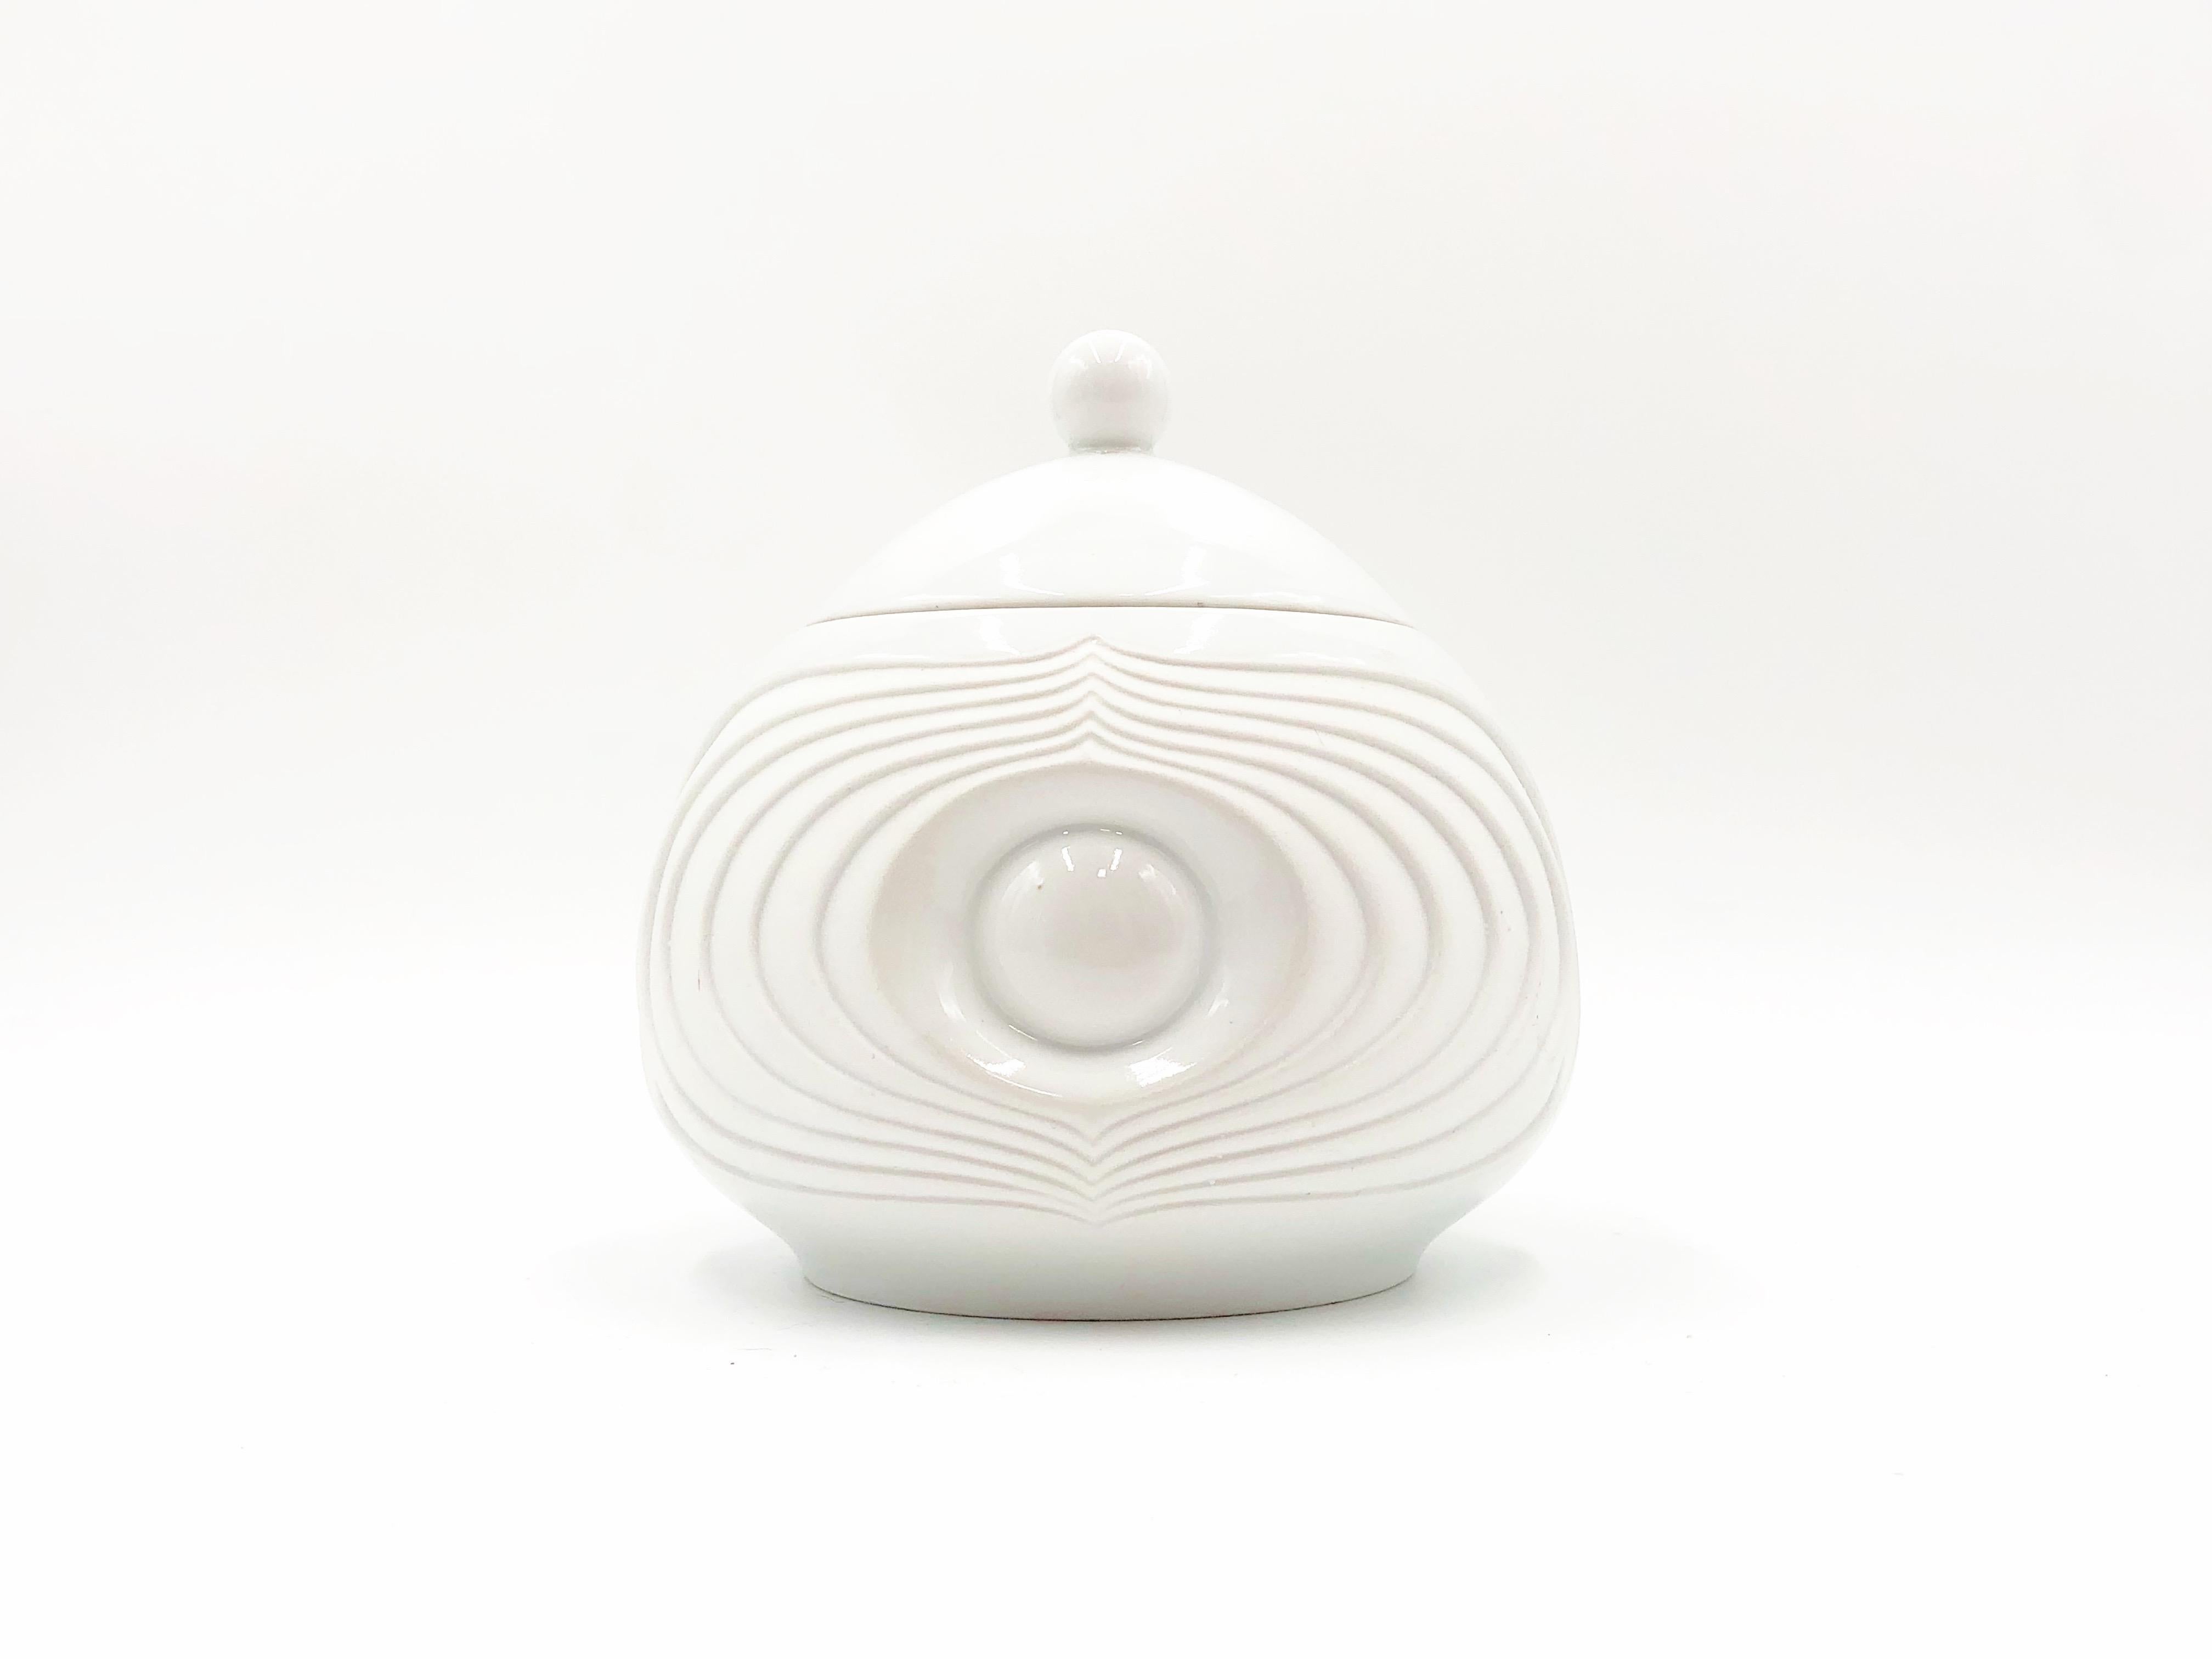 Mid-Century Modern porcelain jar by KPM Royal Porcelain Factory in Germany, circa 1960s.

Details:
- 6